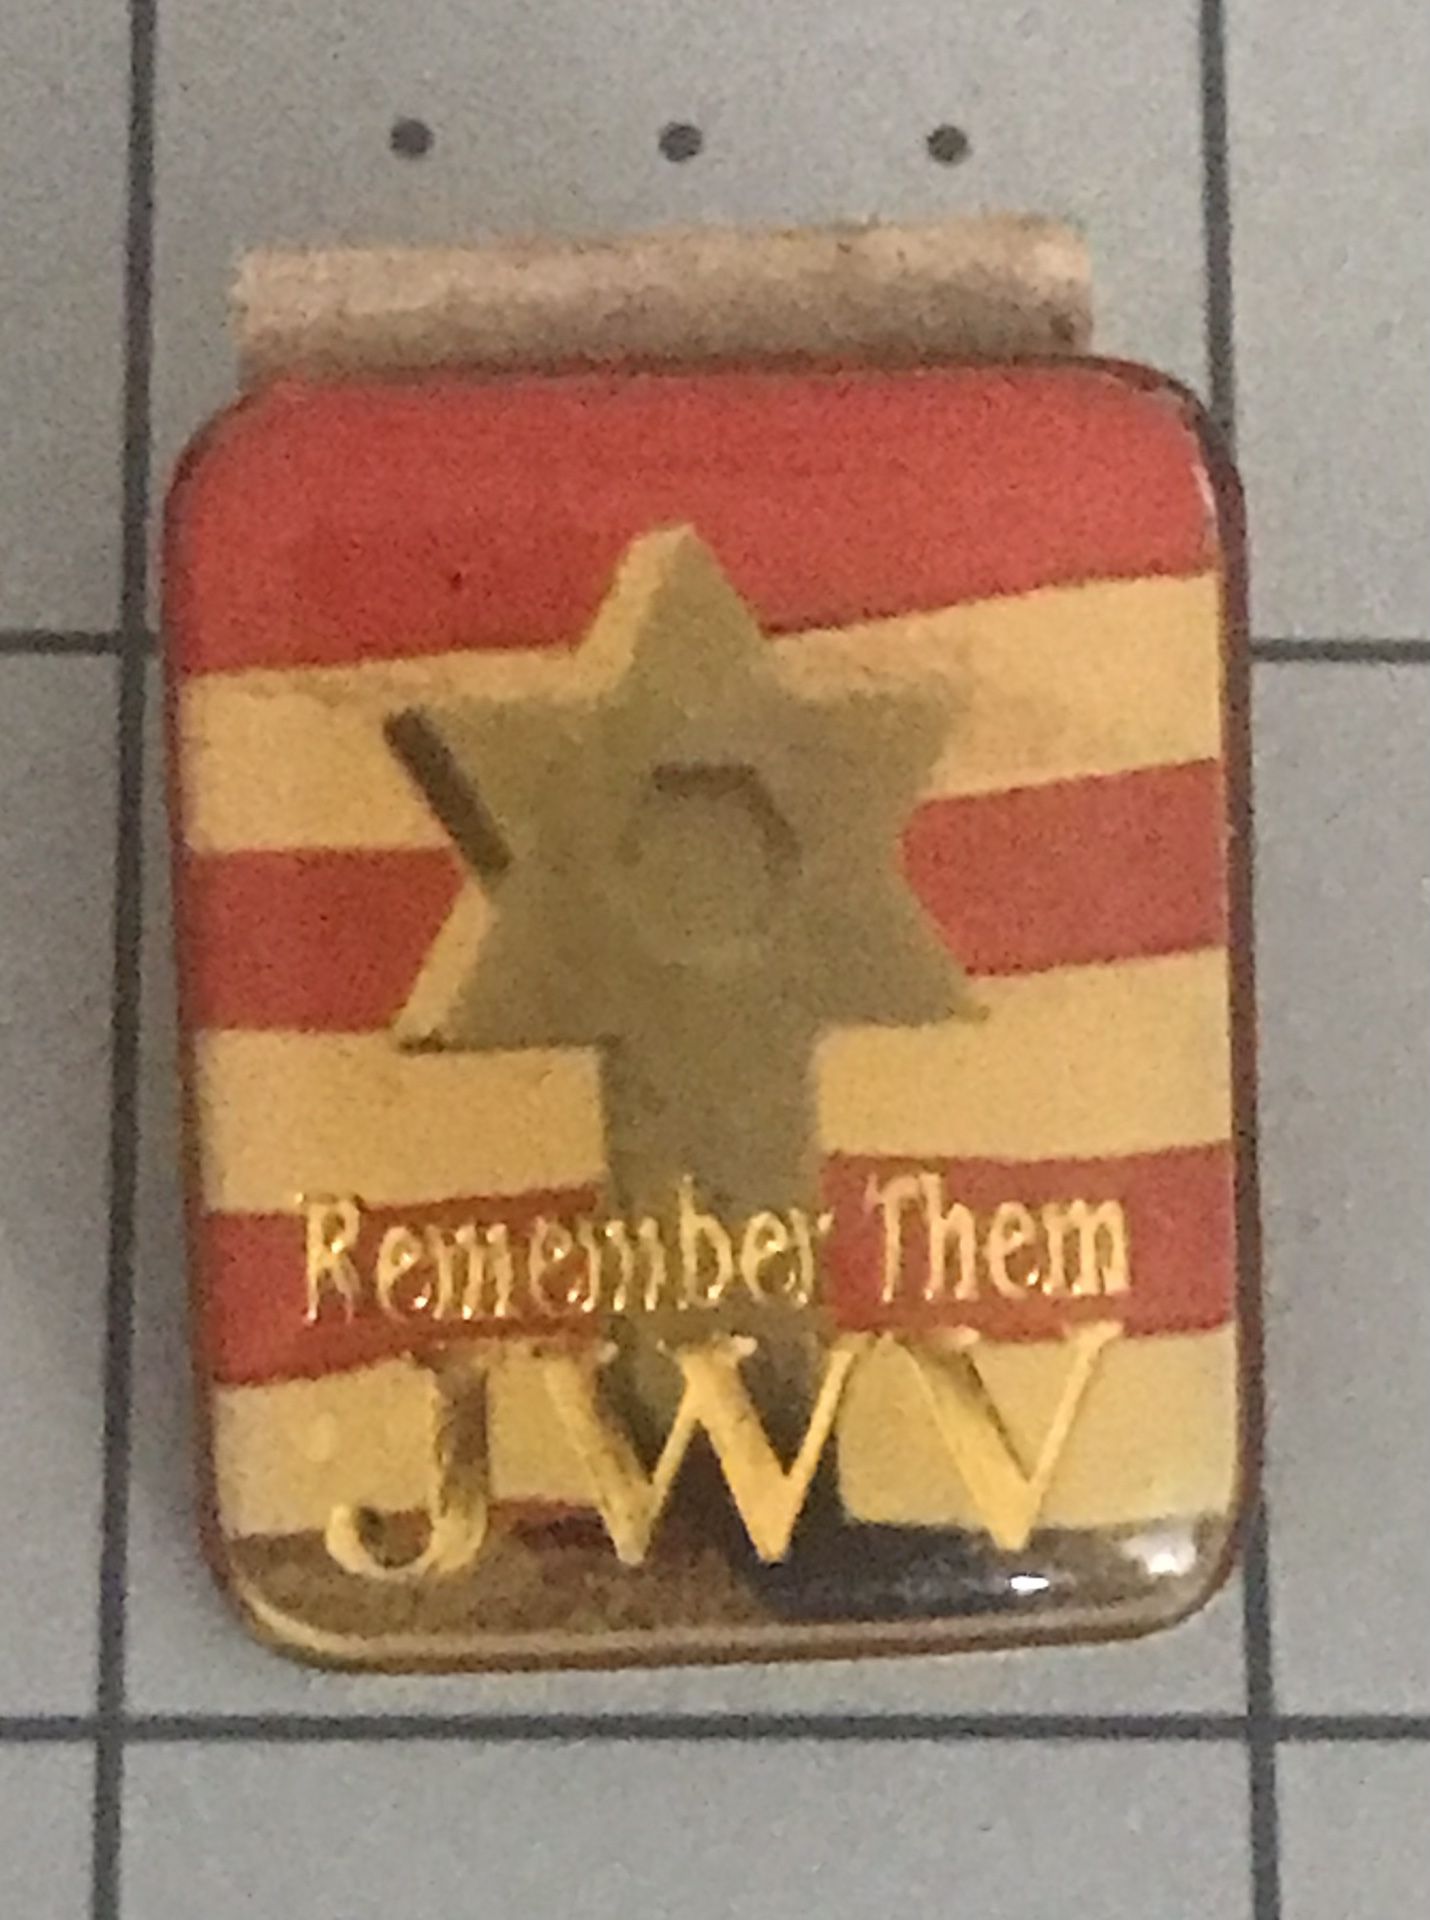 Brand new vintage Remember Them JWV Jewish War Veterans Of The USA Lapel Pin